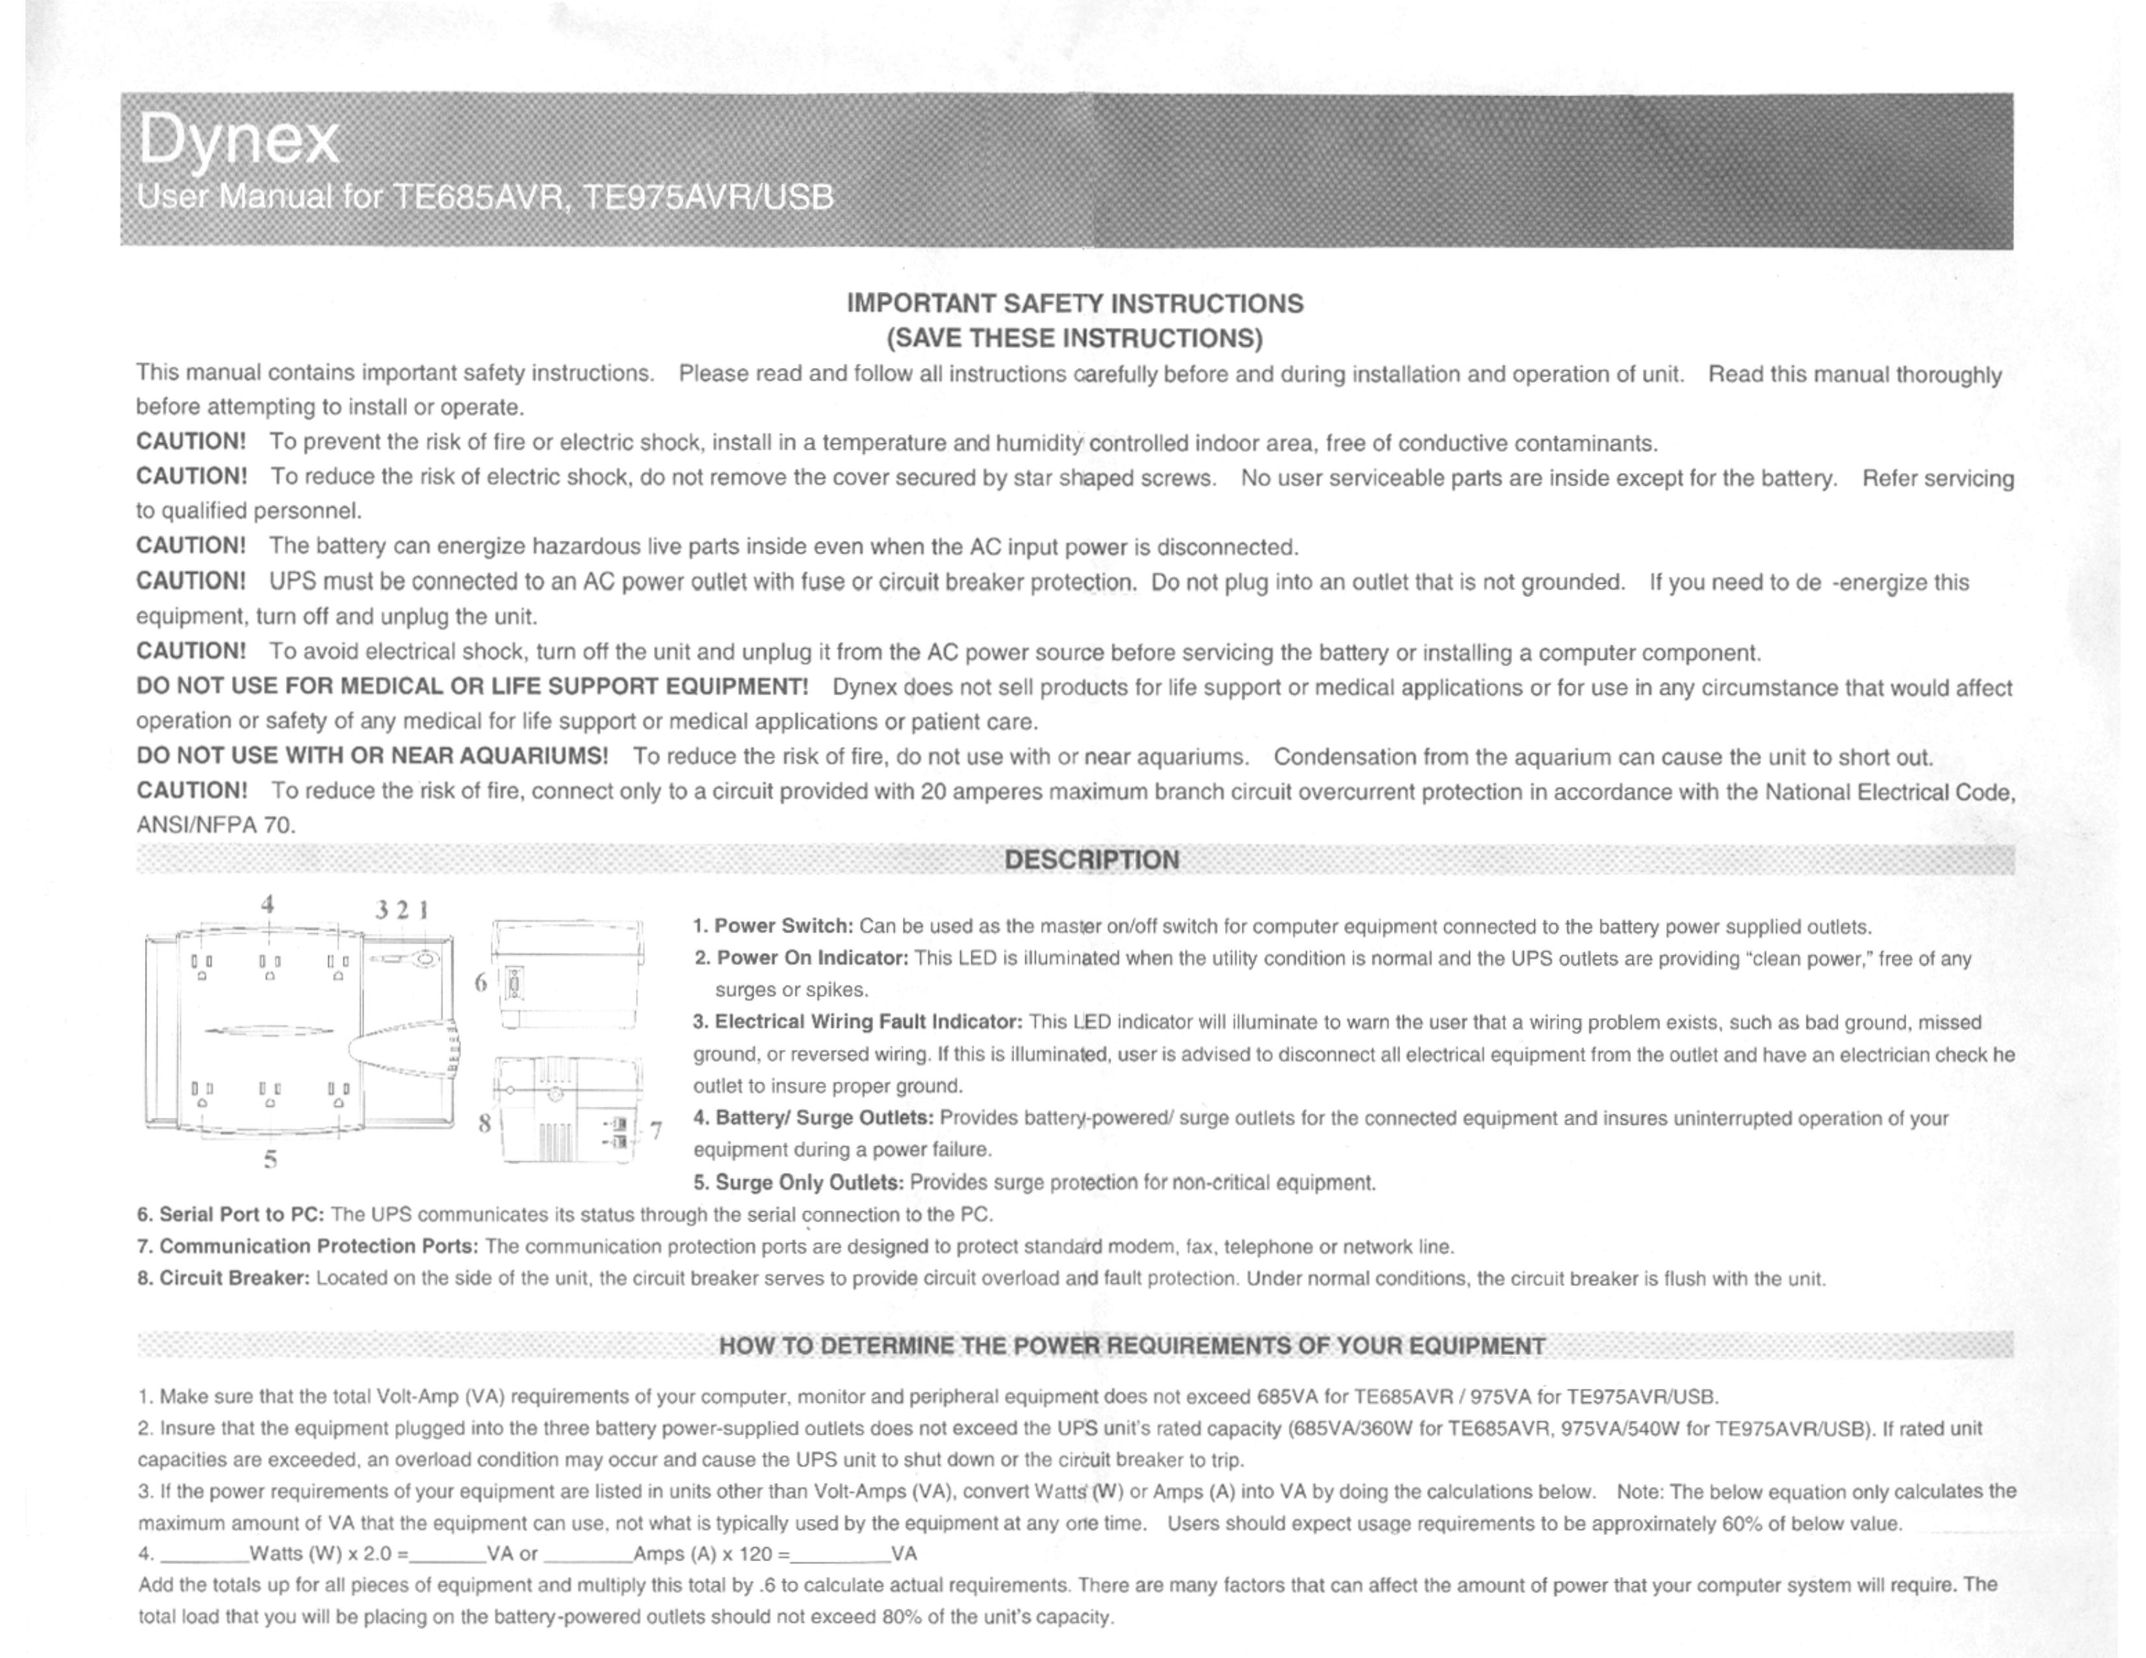 Dynex TE975AVR/USB Power Supply User Manual